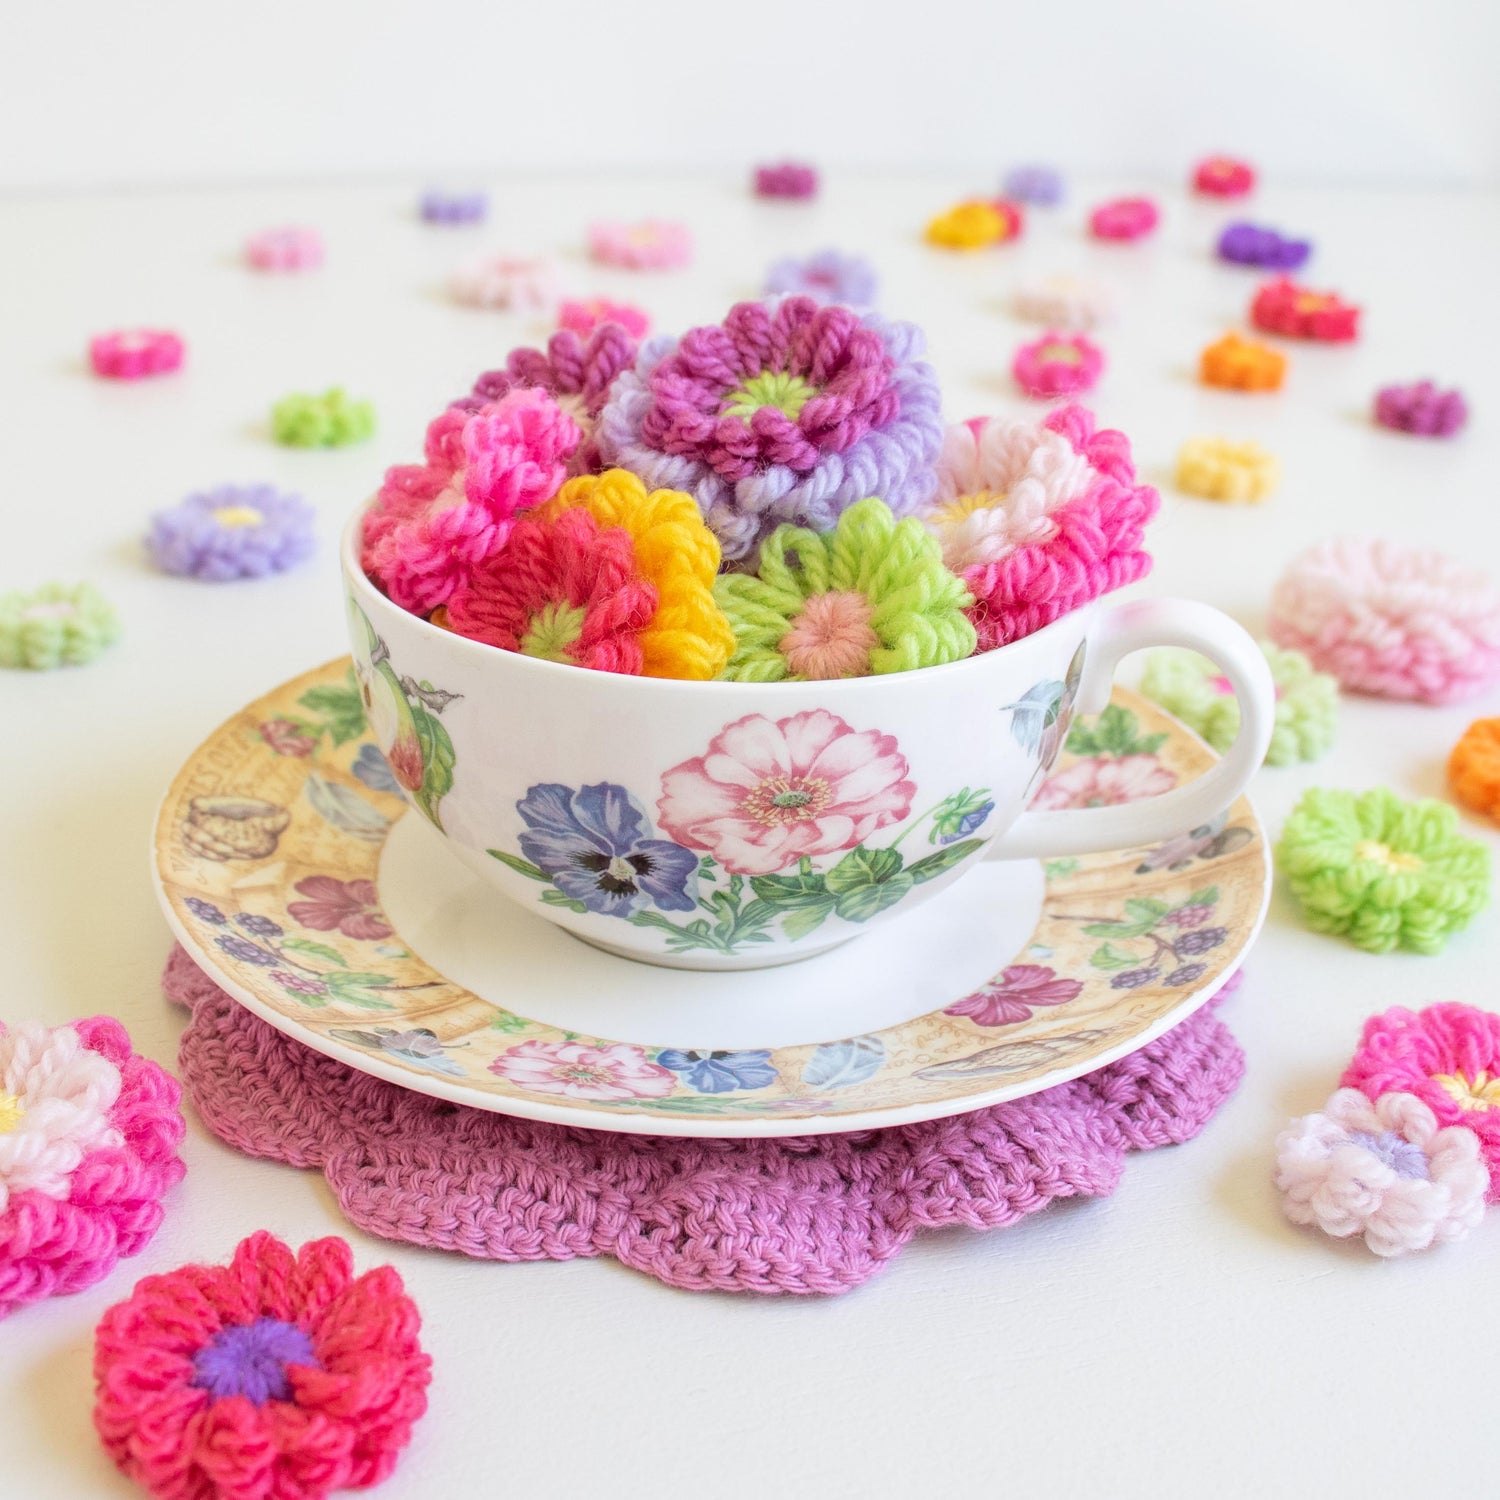 Create beautiful flowers from yarn using Clover's Hana-Ami Flower Loom - so easy to use!